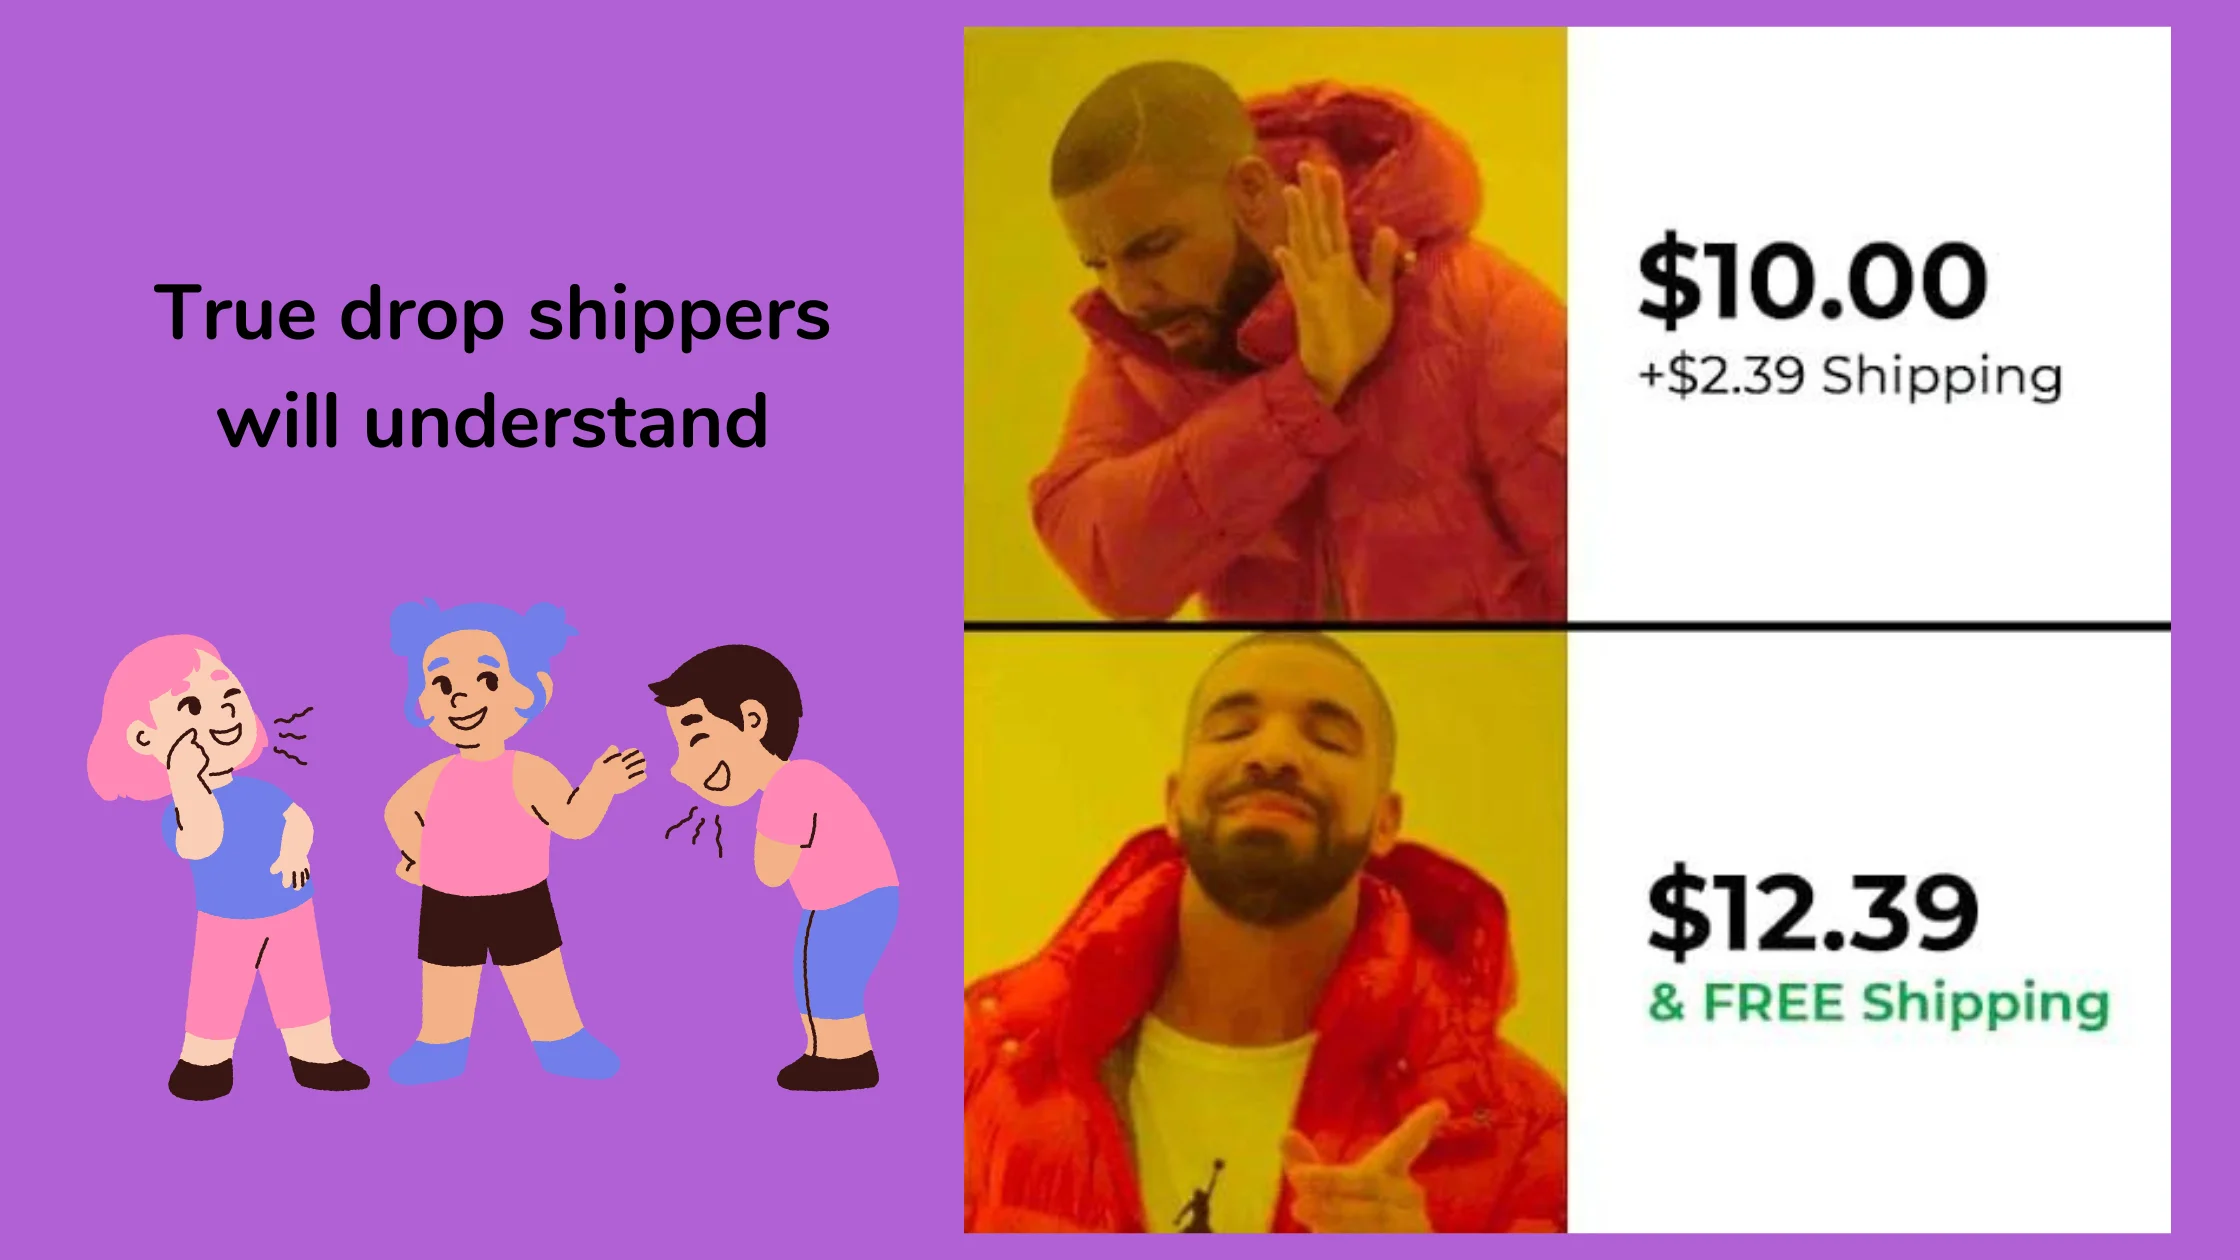 True drop shippers will understand